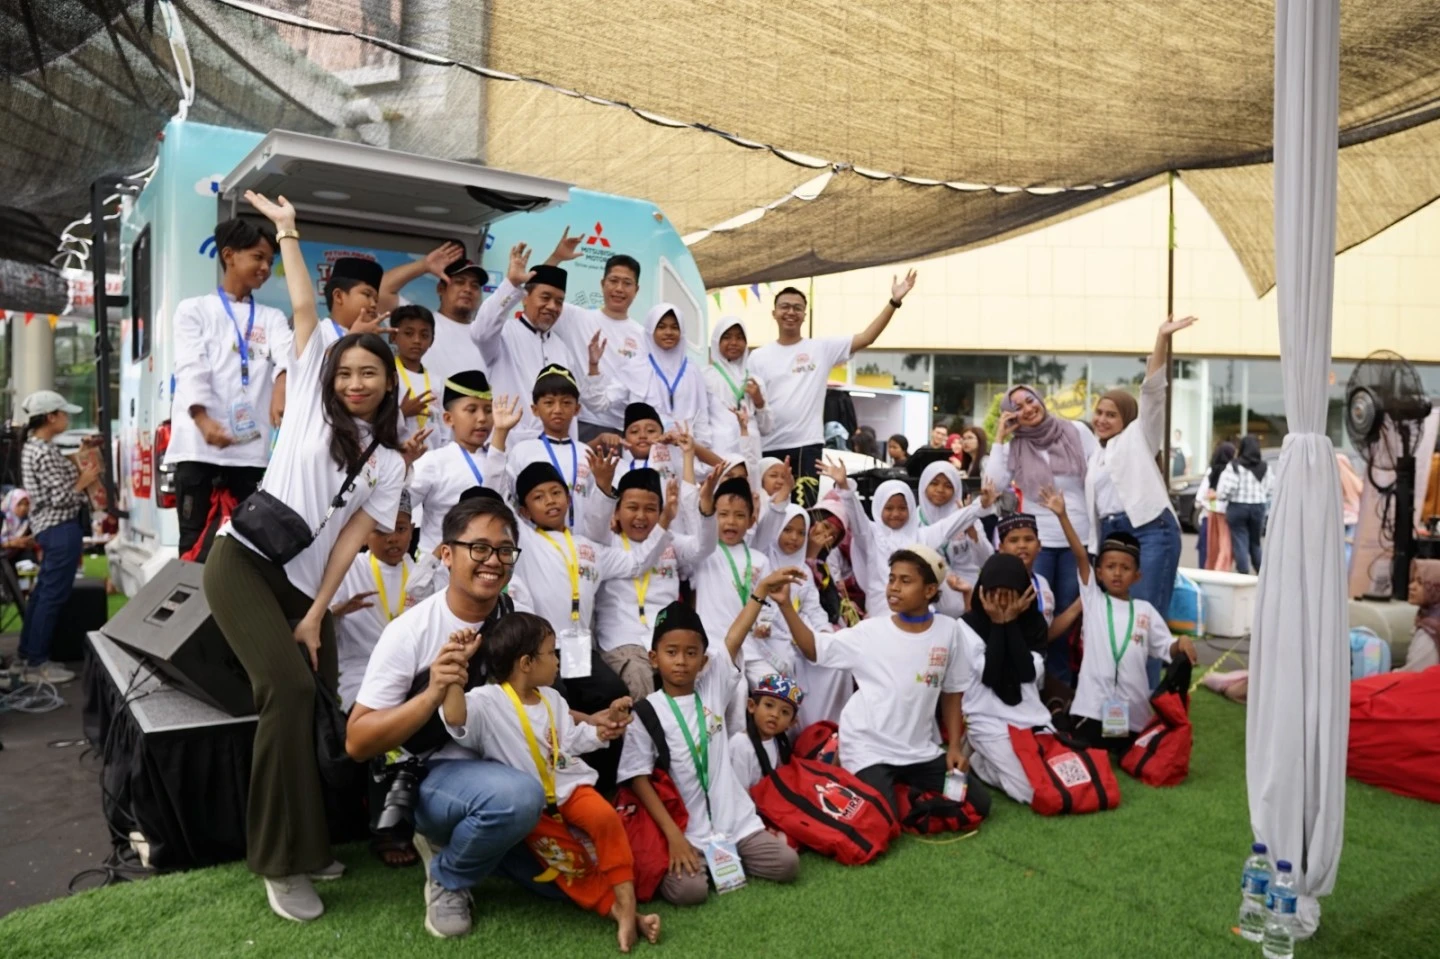 Petualangan Akhir Pekan TRITON EDUCAR Dimulai: Perjalanan Edukasi yang Menyenangkan Bagi Anak-anak di Surabaya